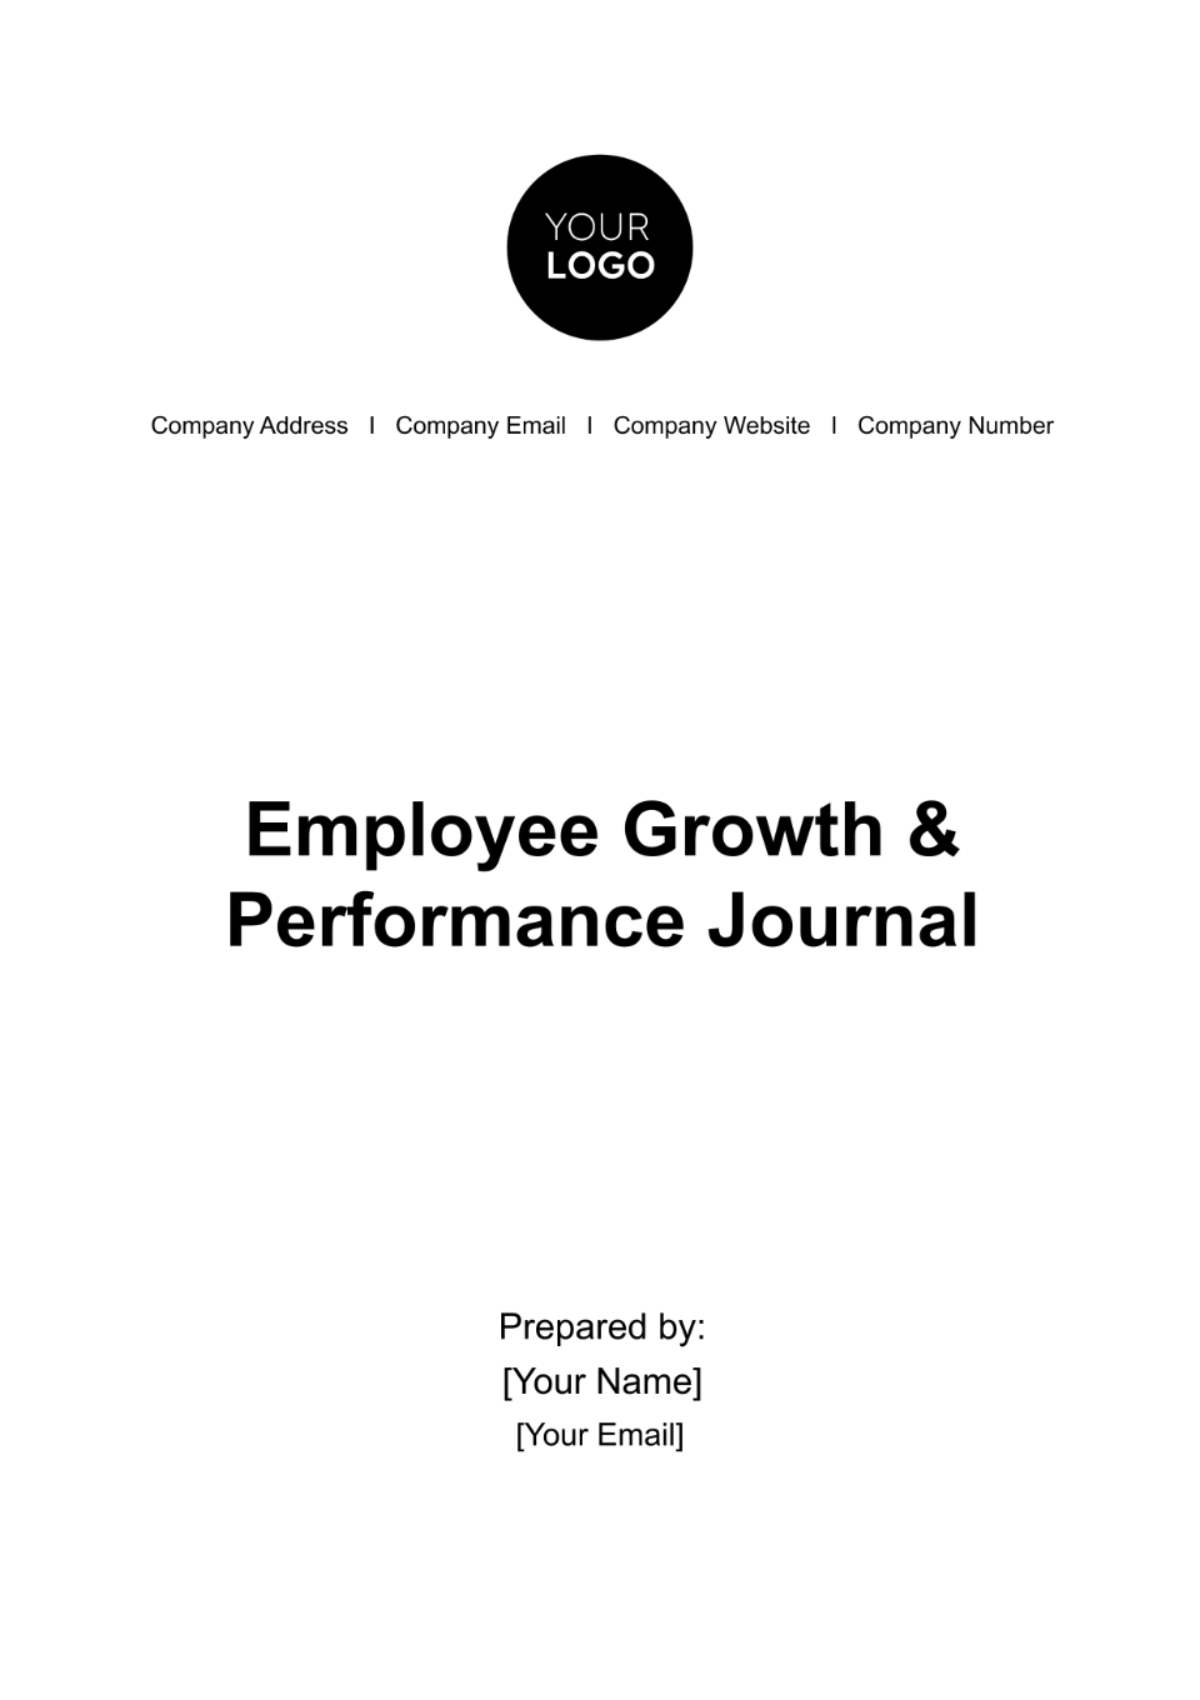 Employee Growth & Performance Journal HR Template